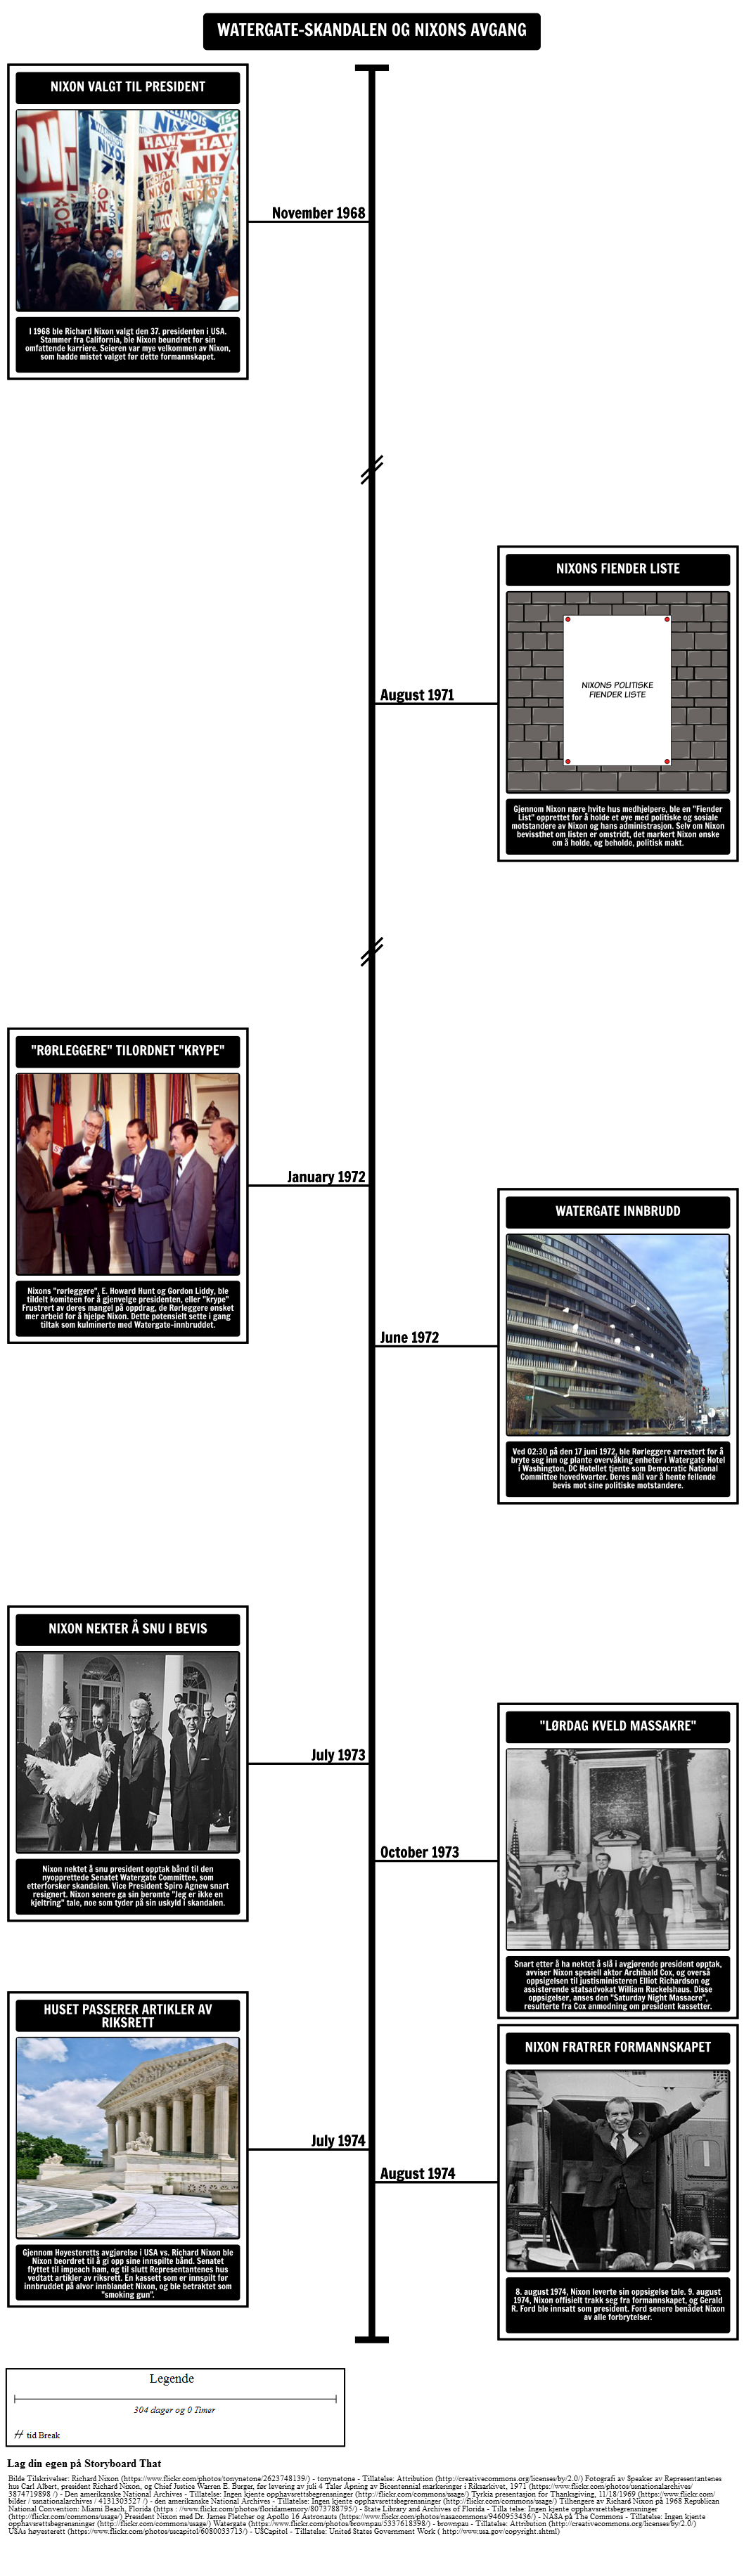 Watergate-skandalen Tidslinje og Nixons Avgang